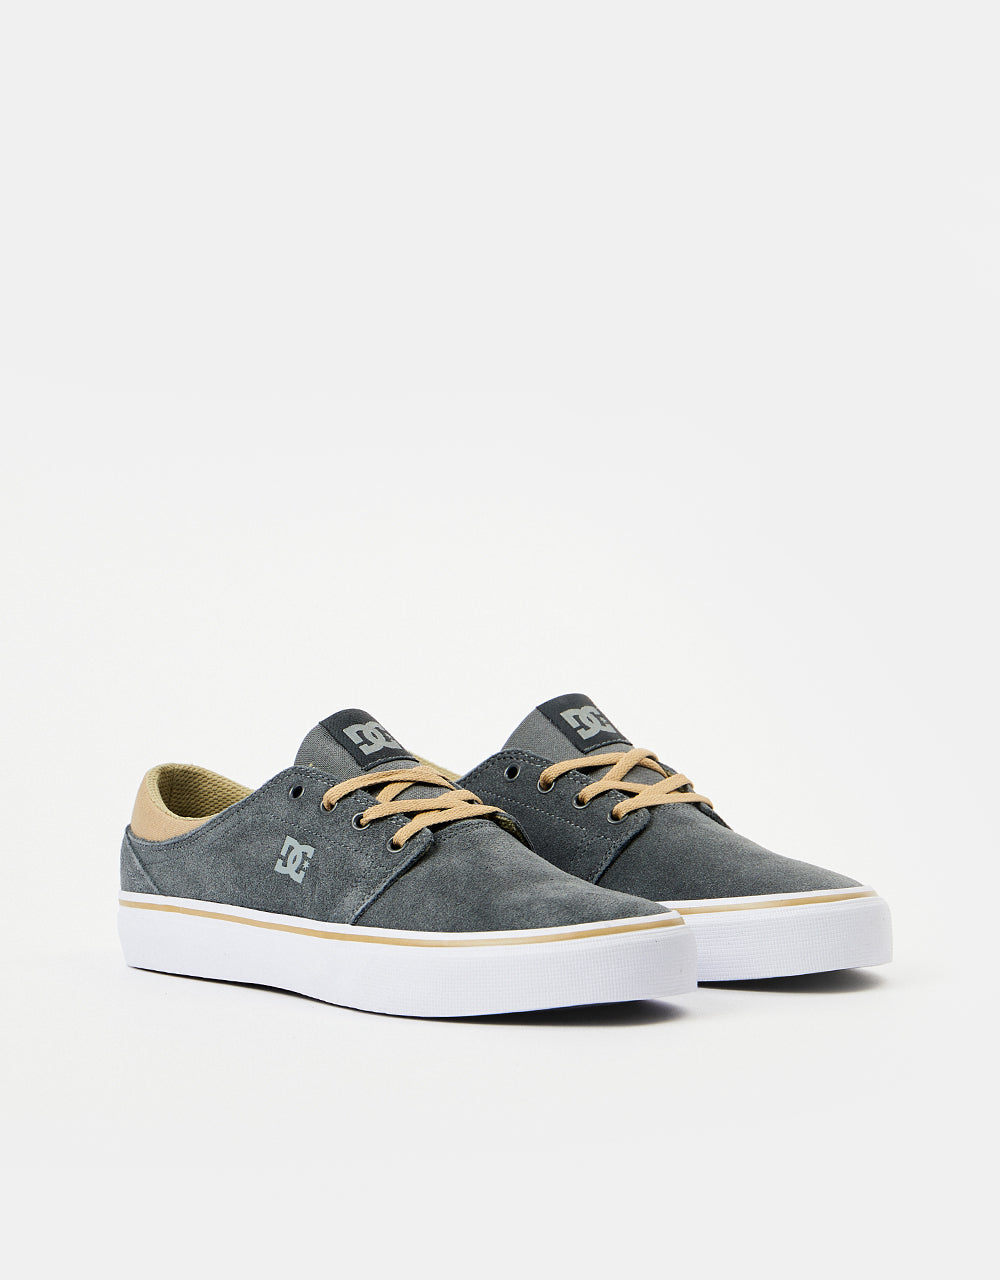 DC Trase SD Skate Shoes - Dark Grey/White